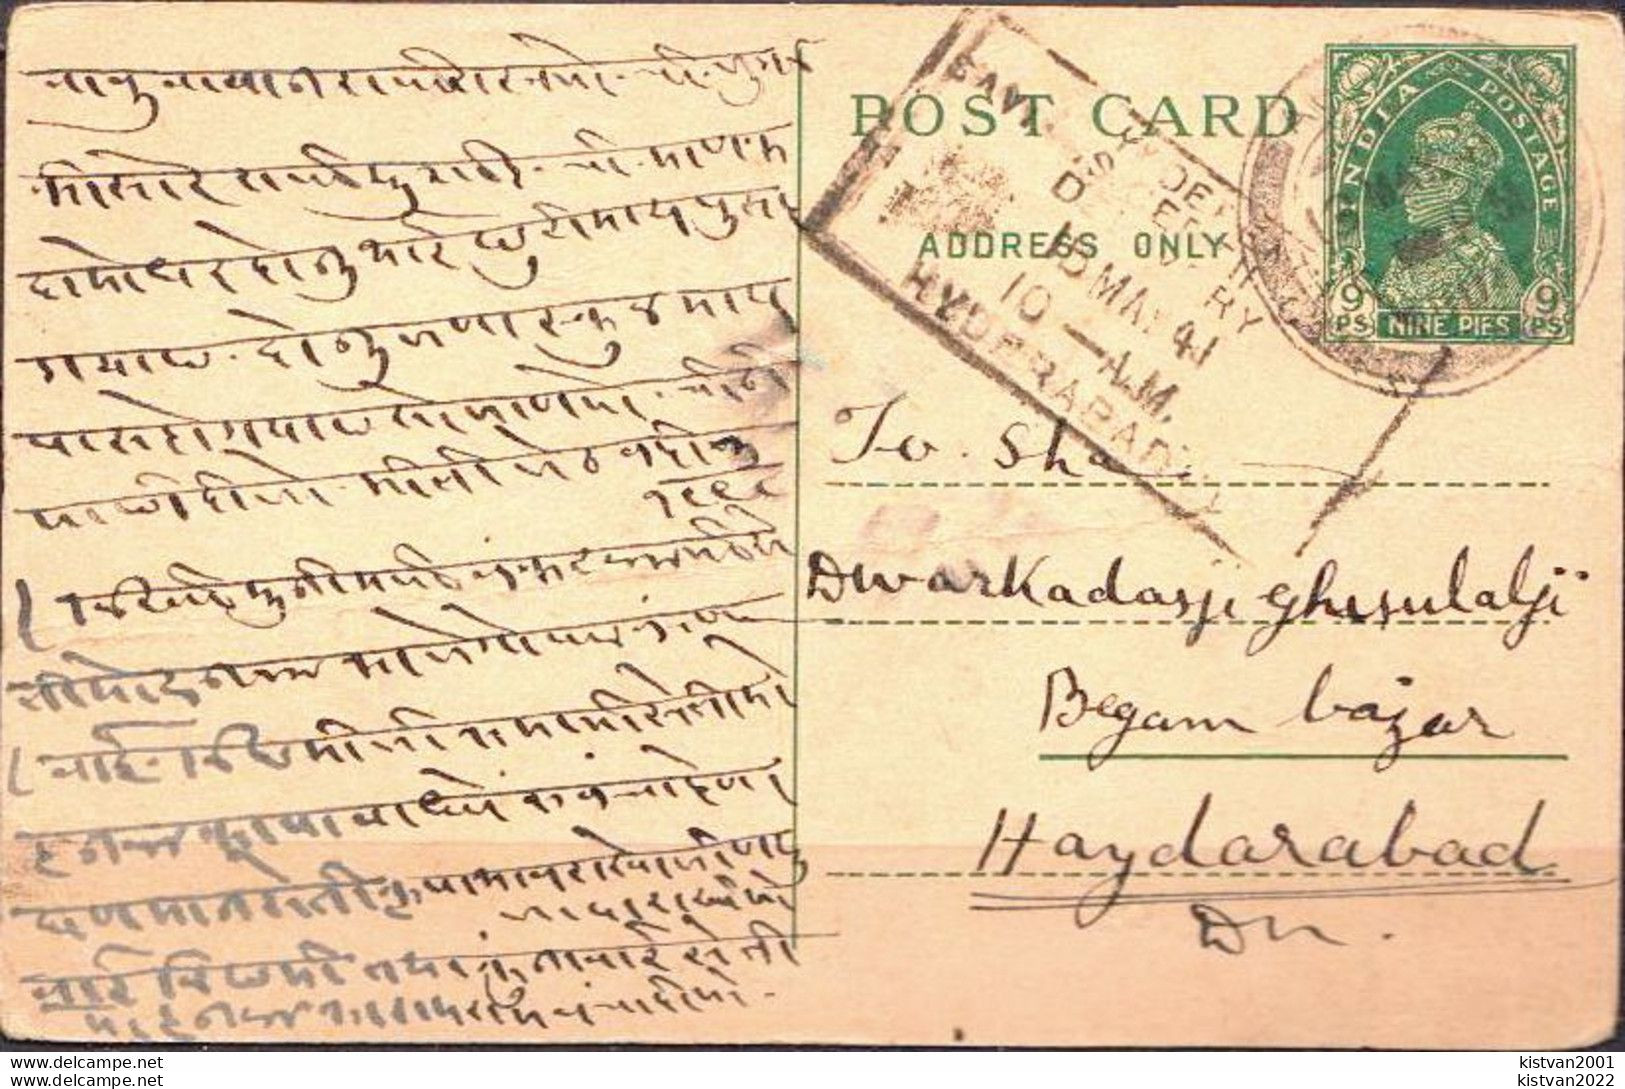 Postal History: India Postal Stationery Card - 1911-35 King George V